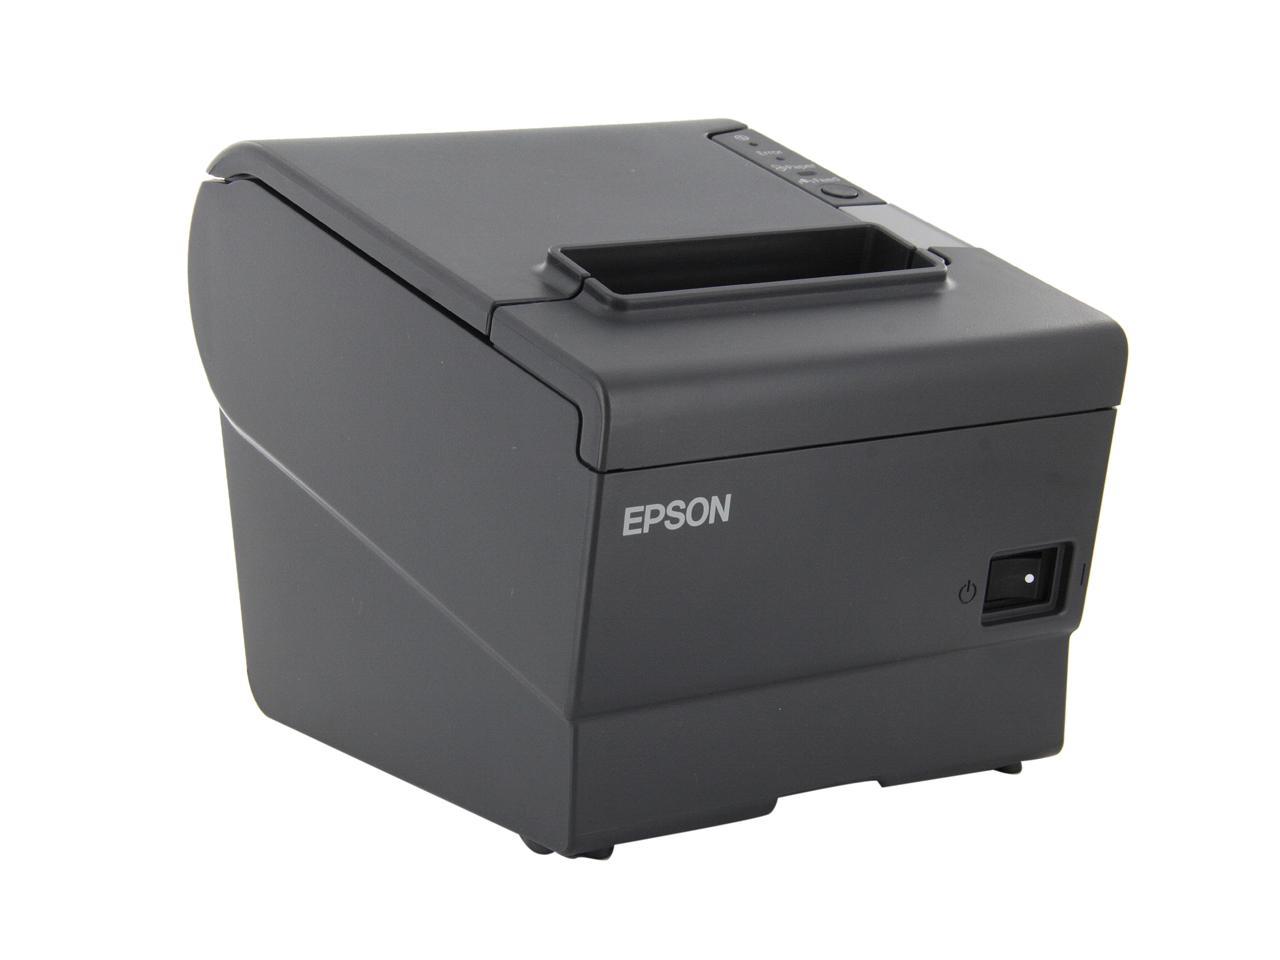 Epson Tm T88v Direct Thermal Printer Monochrome Desktop Receipt Print Neweggca 4824